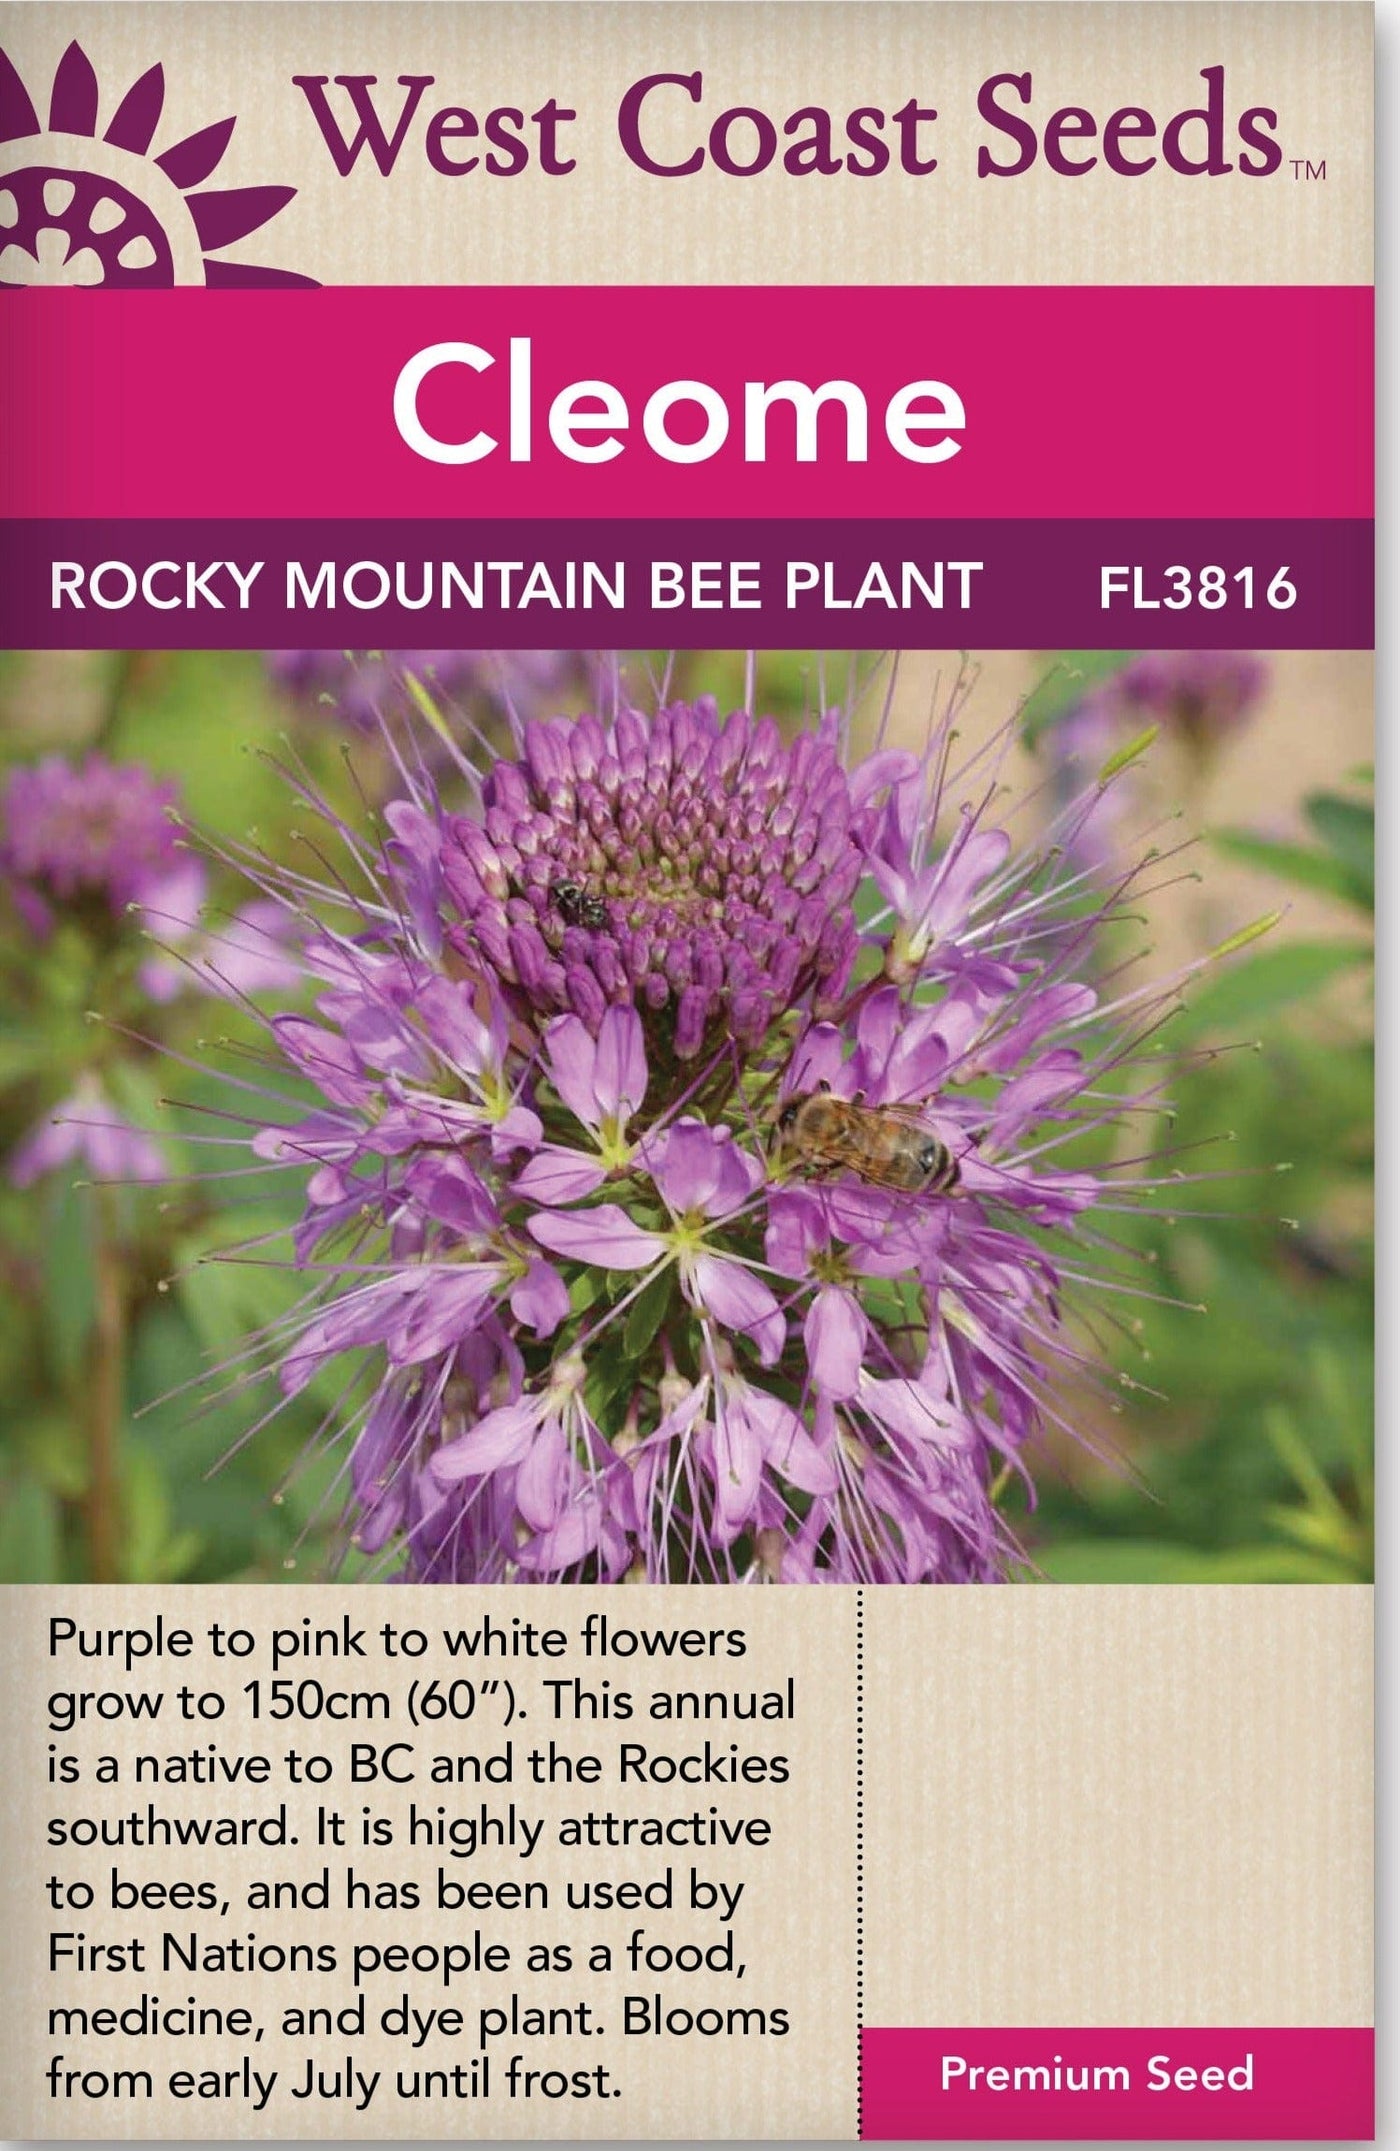 Cleome Rocky Mountain Bee Plant - West Coast Seeds